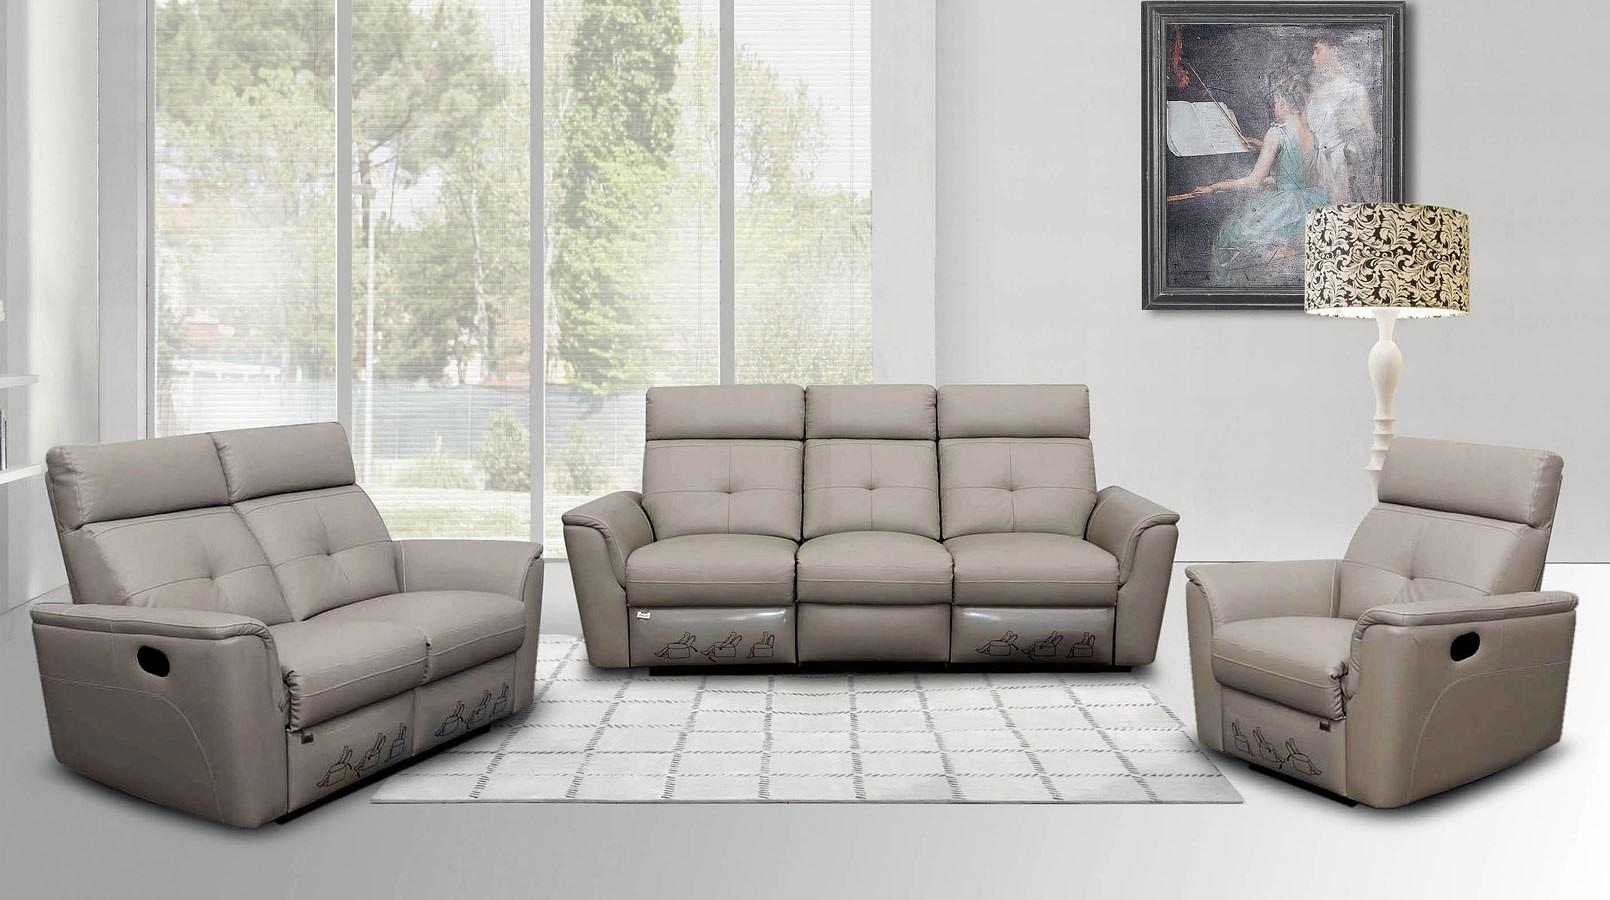 https://nyfurnitureoutlets.com/products/esf-8501-contemporary-light-grey-italian-leather-recliner-sofa-set-2pcs-modern/1x1/179305-7-252508605201.jpg